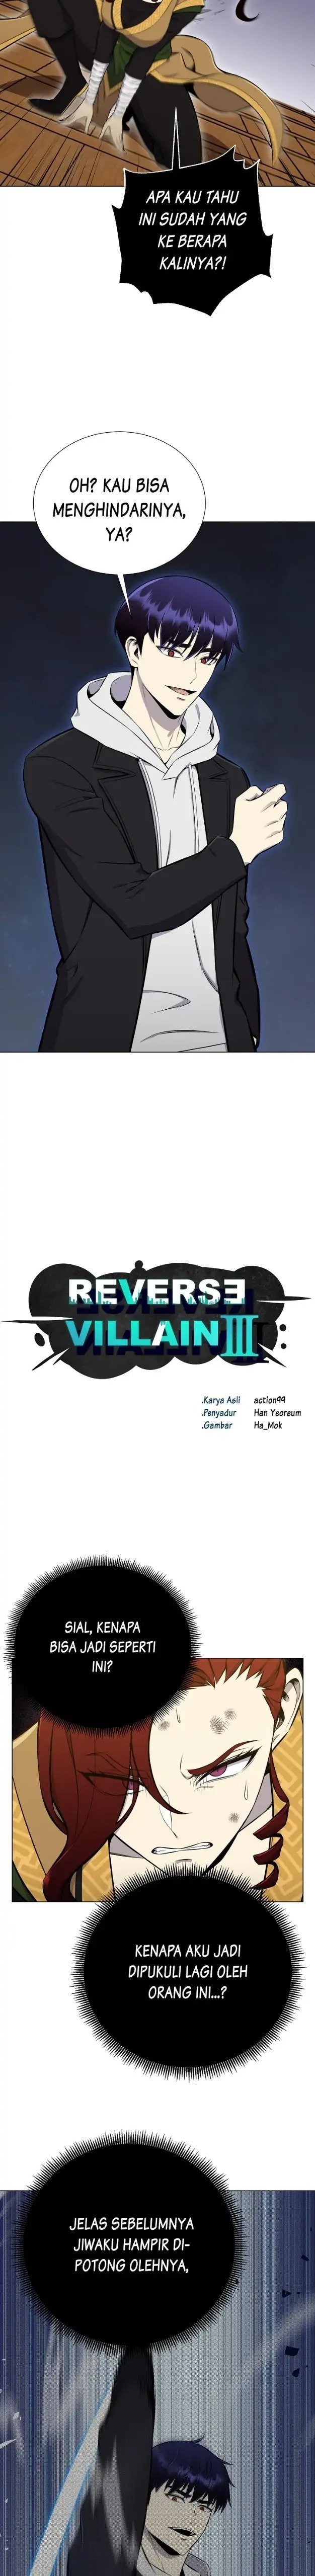 Reverse Villain Id Chapter 93 - 111